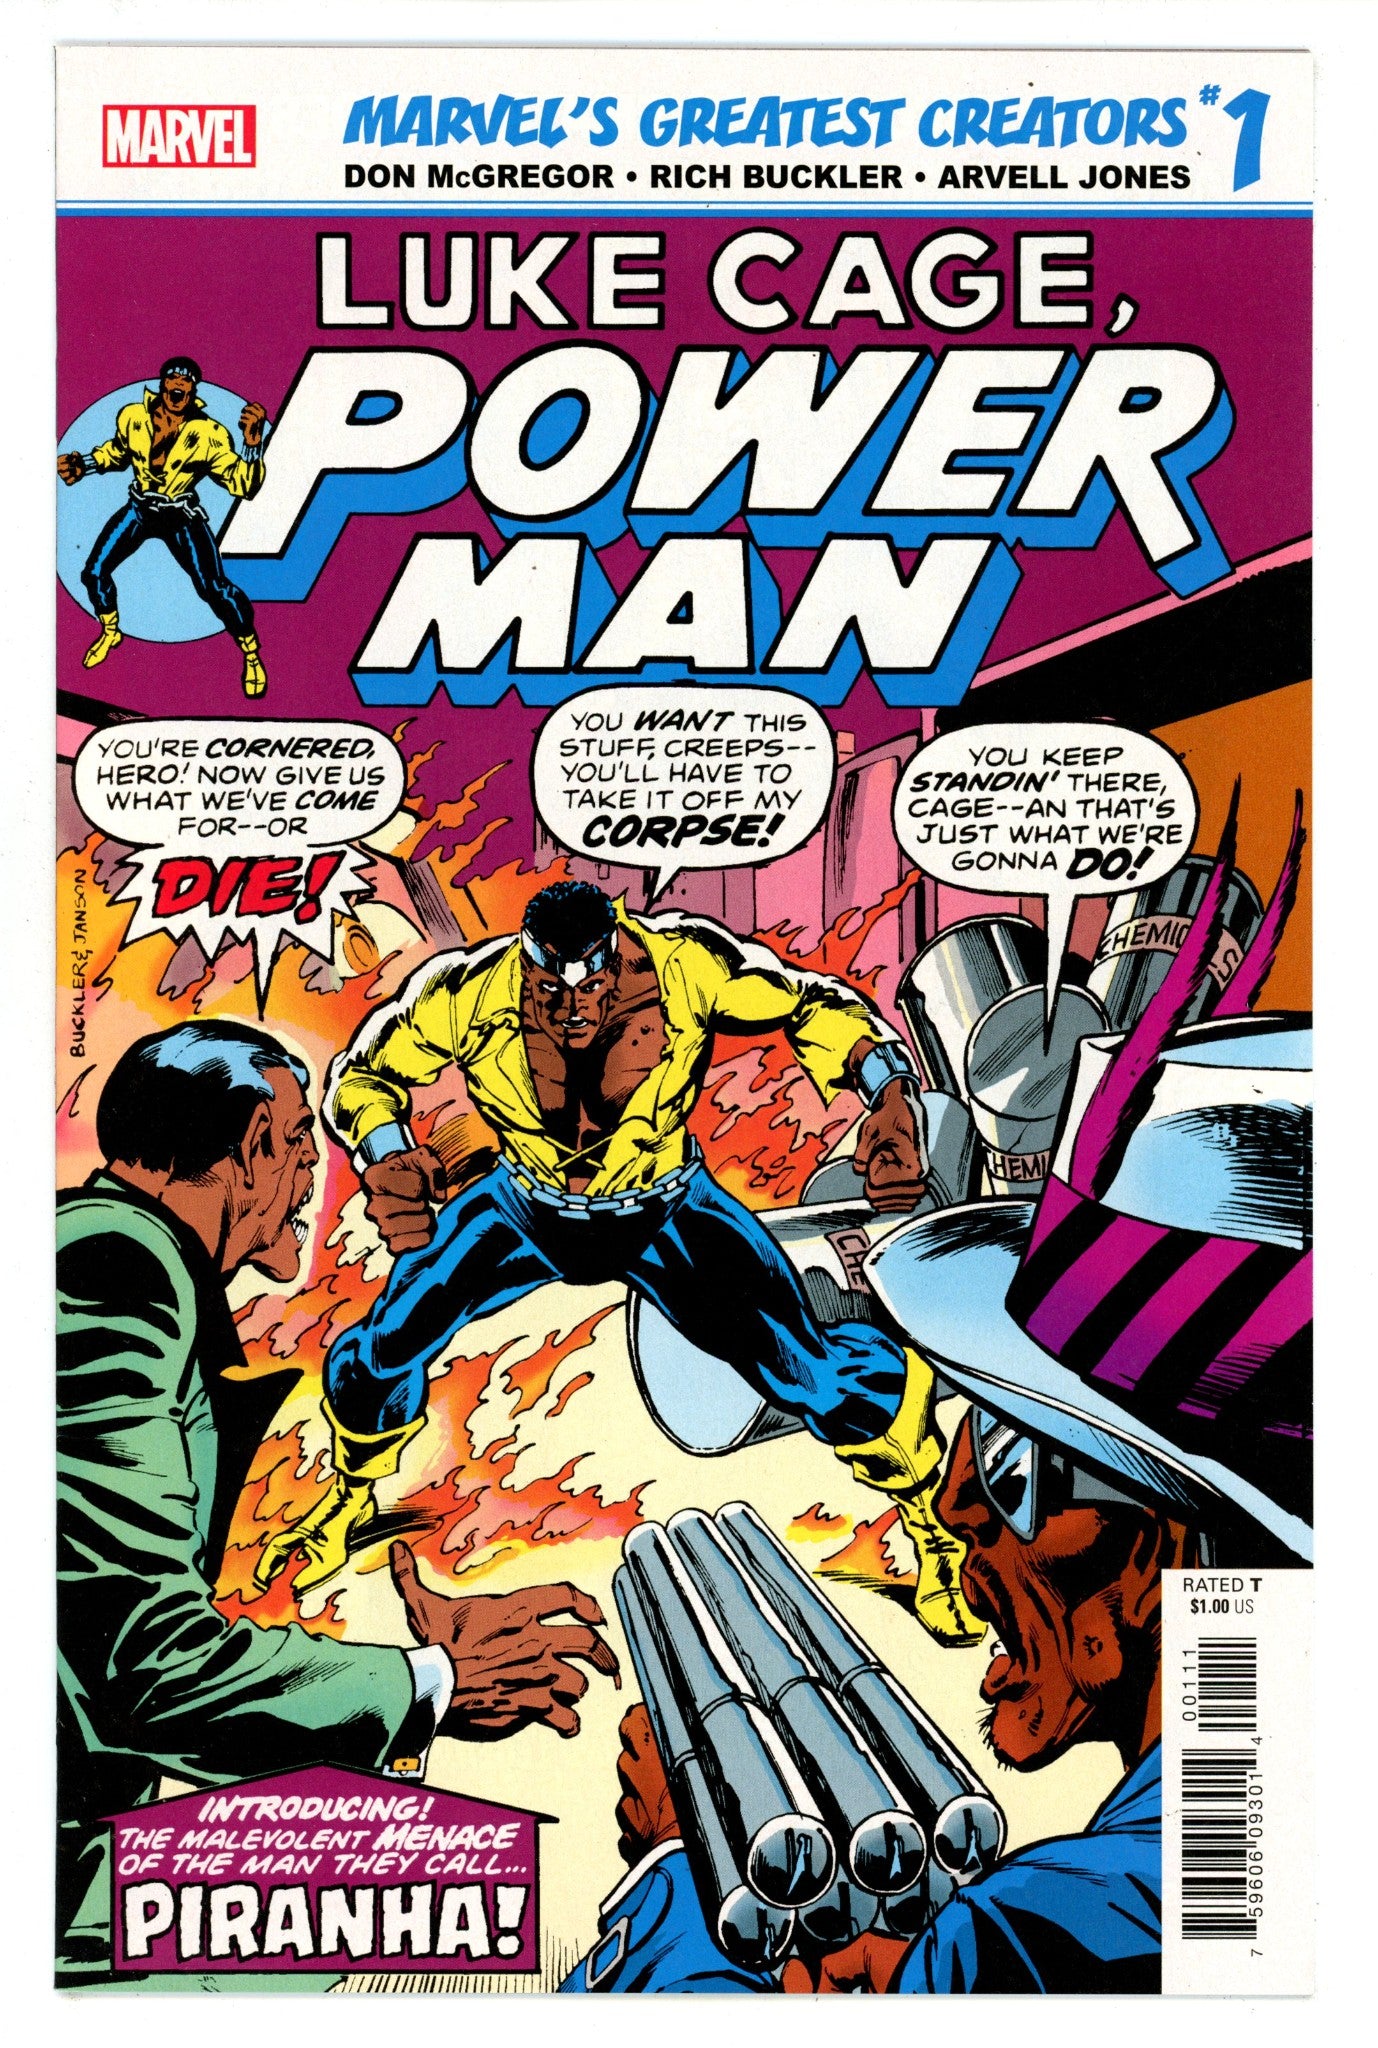 Marvel's Greatest Creators: Luke Cage, Power Man - Piranha! 1 High Grade (2019) 